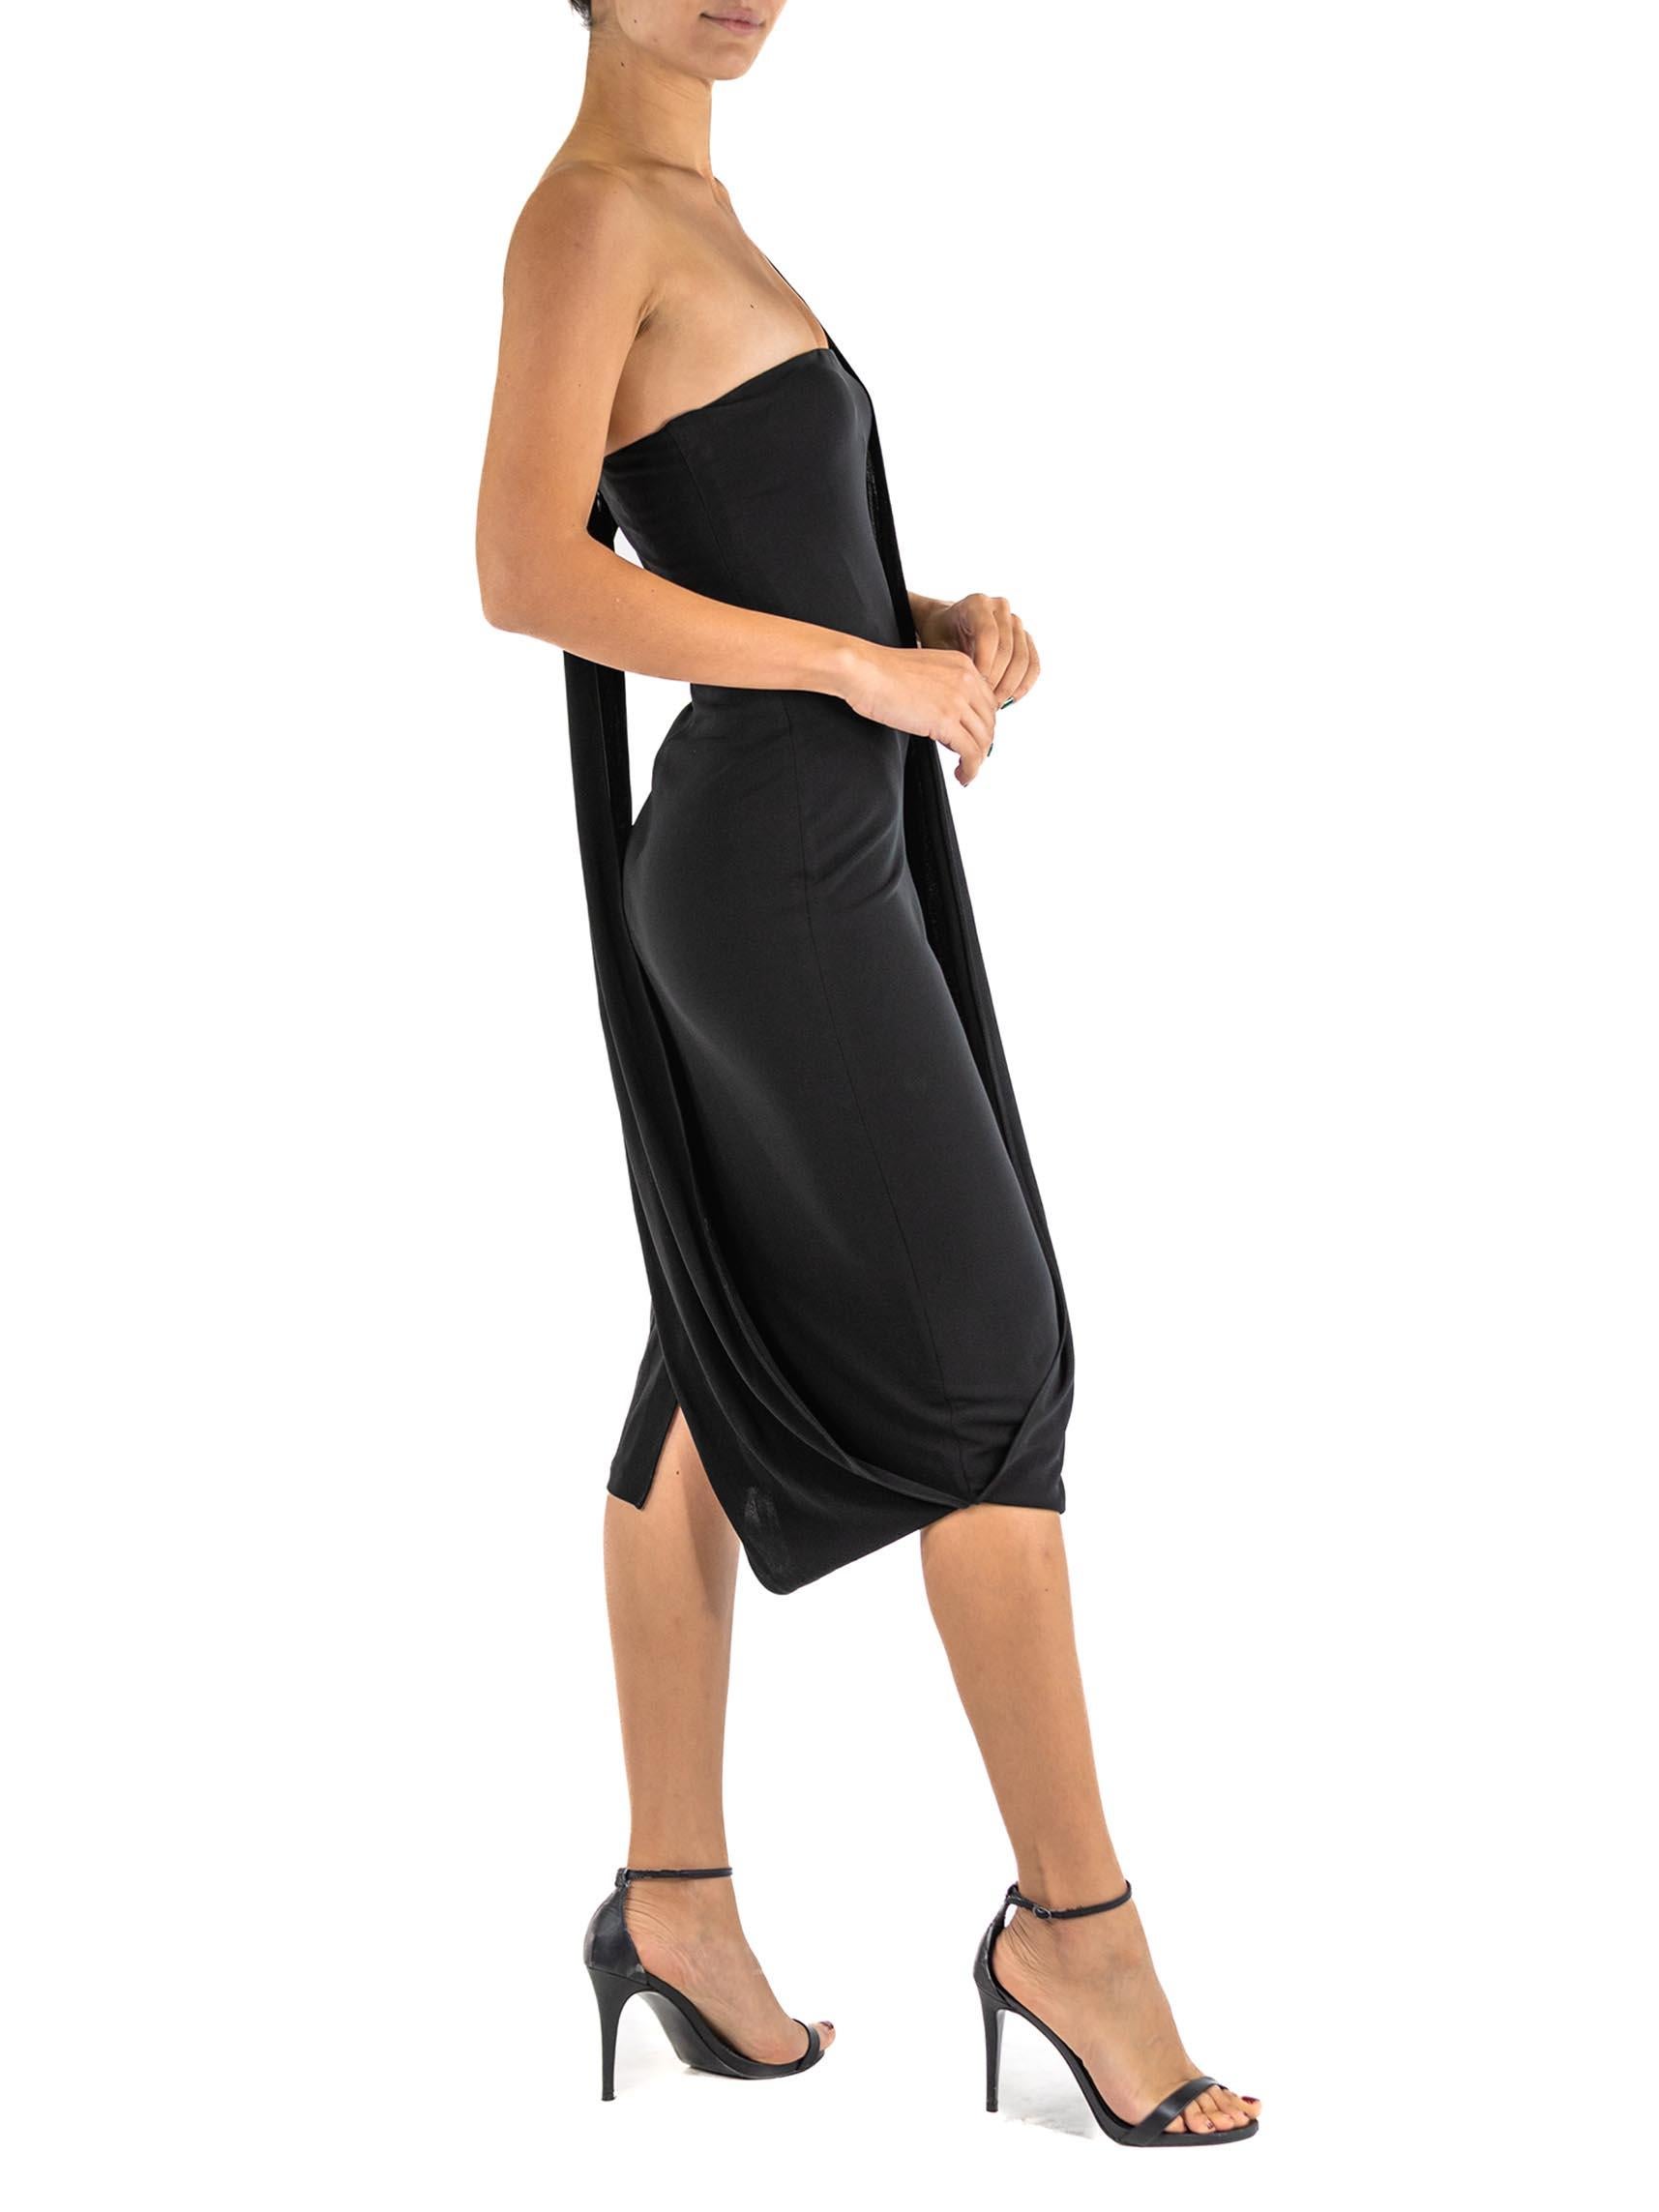 Women's 1990S HERVE LEGER Black Rayon Blend Strapless Dress With One Shoulder Sash For Sale